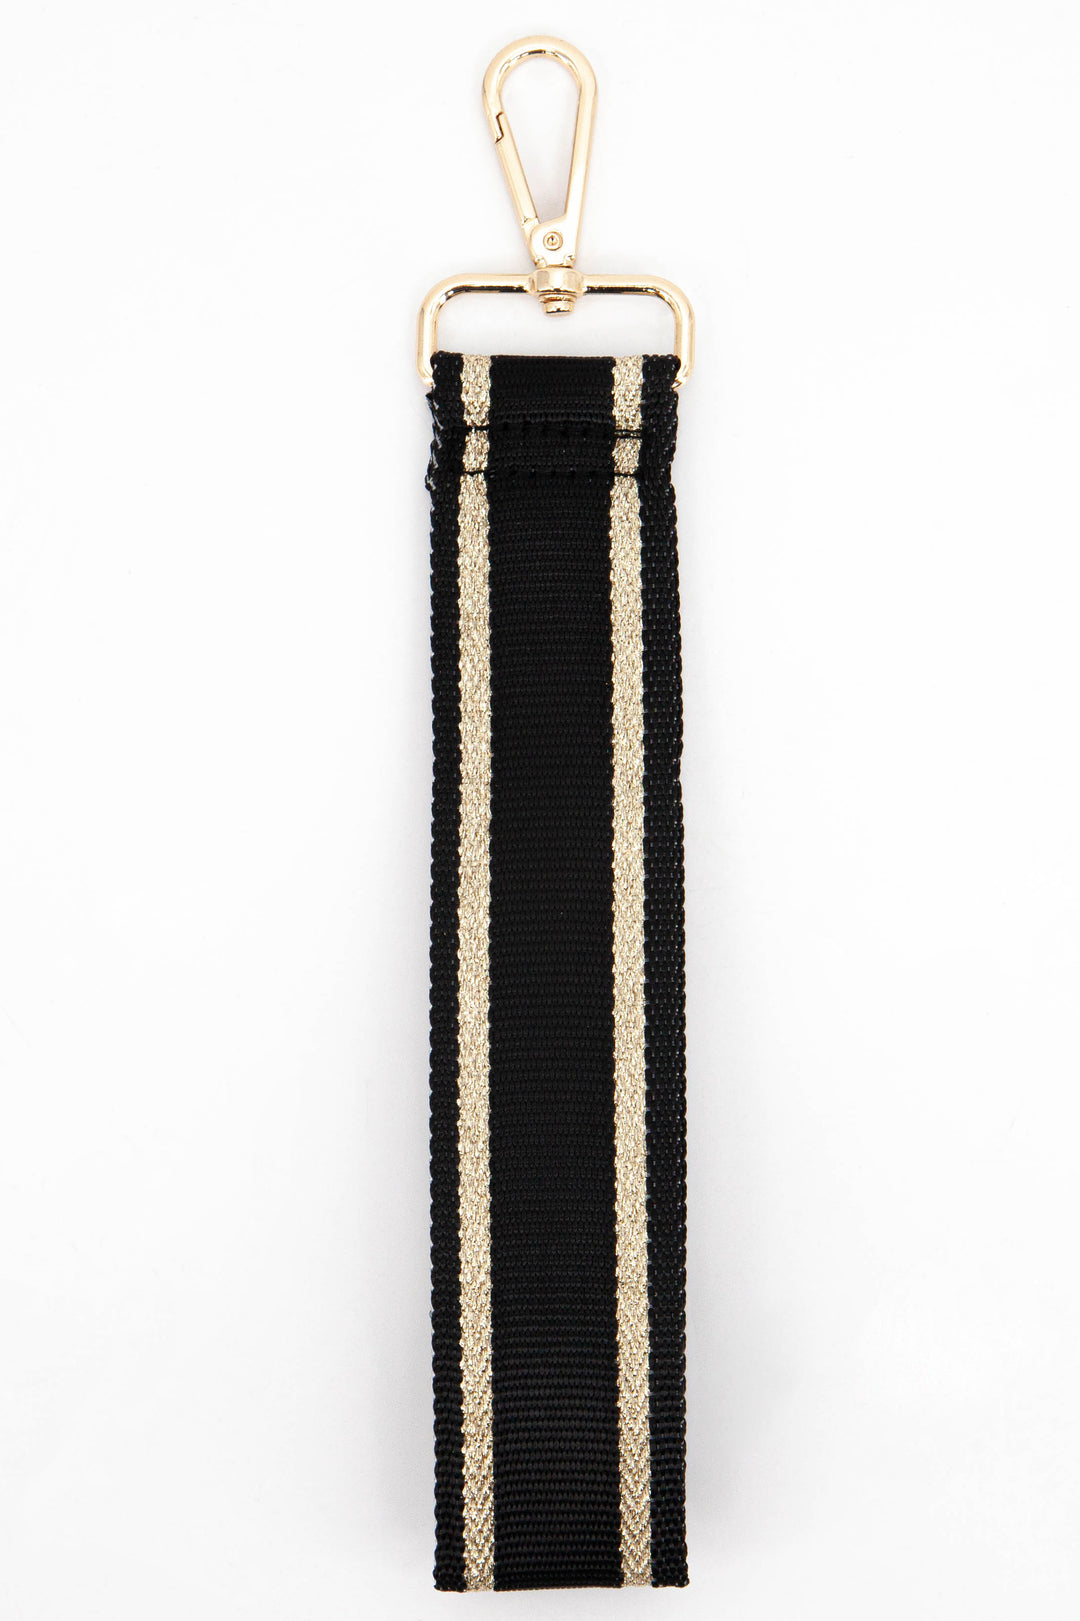 Plain Wrist Strap with Metallic Border Stripe in Black & Gold